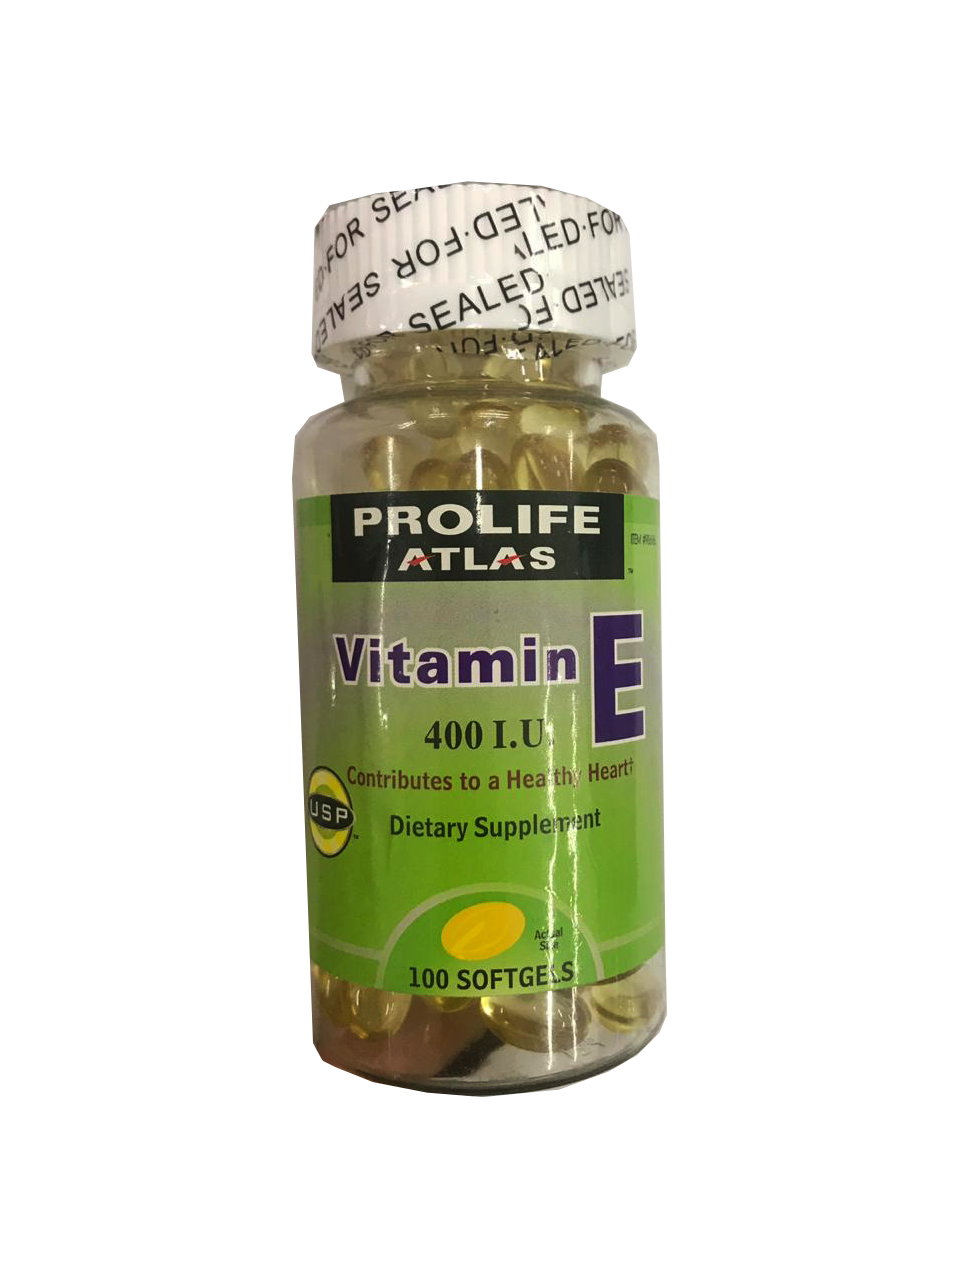 Pro Life Atlas Vitamins E